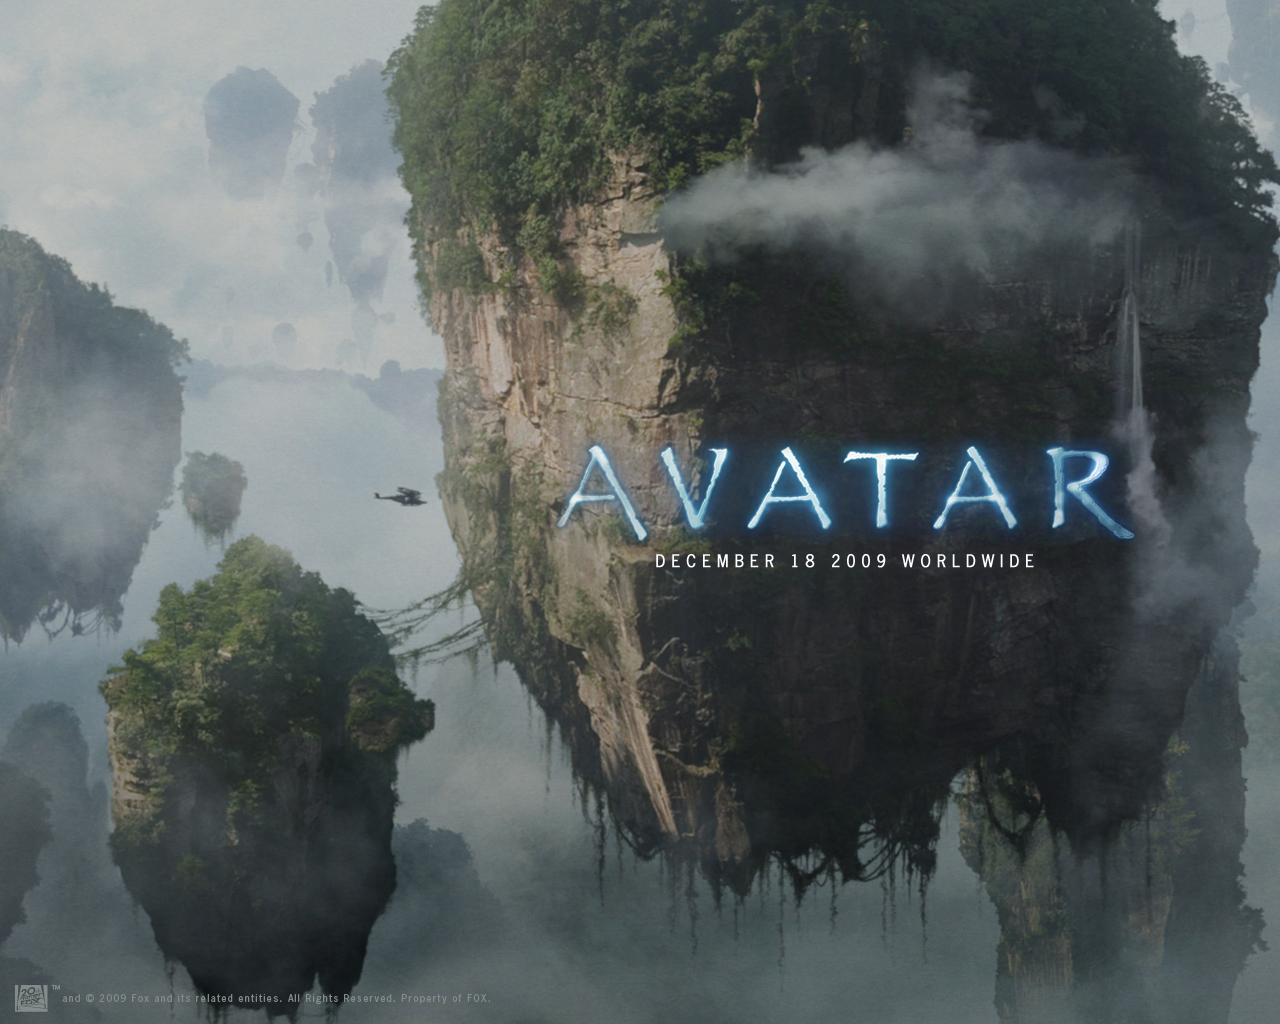 James Cameron's "Avatar" desktop wallpaper number 3 (1280 x 1024 pixels)